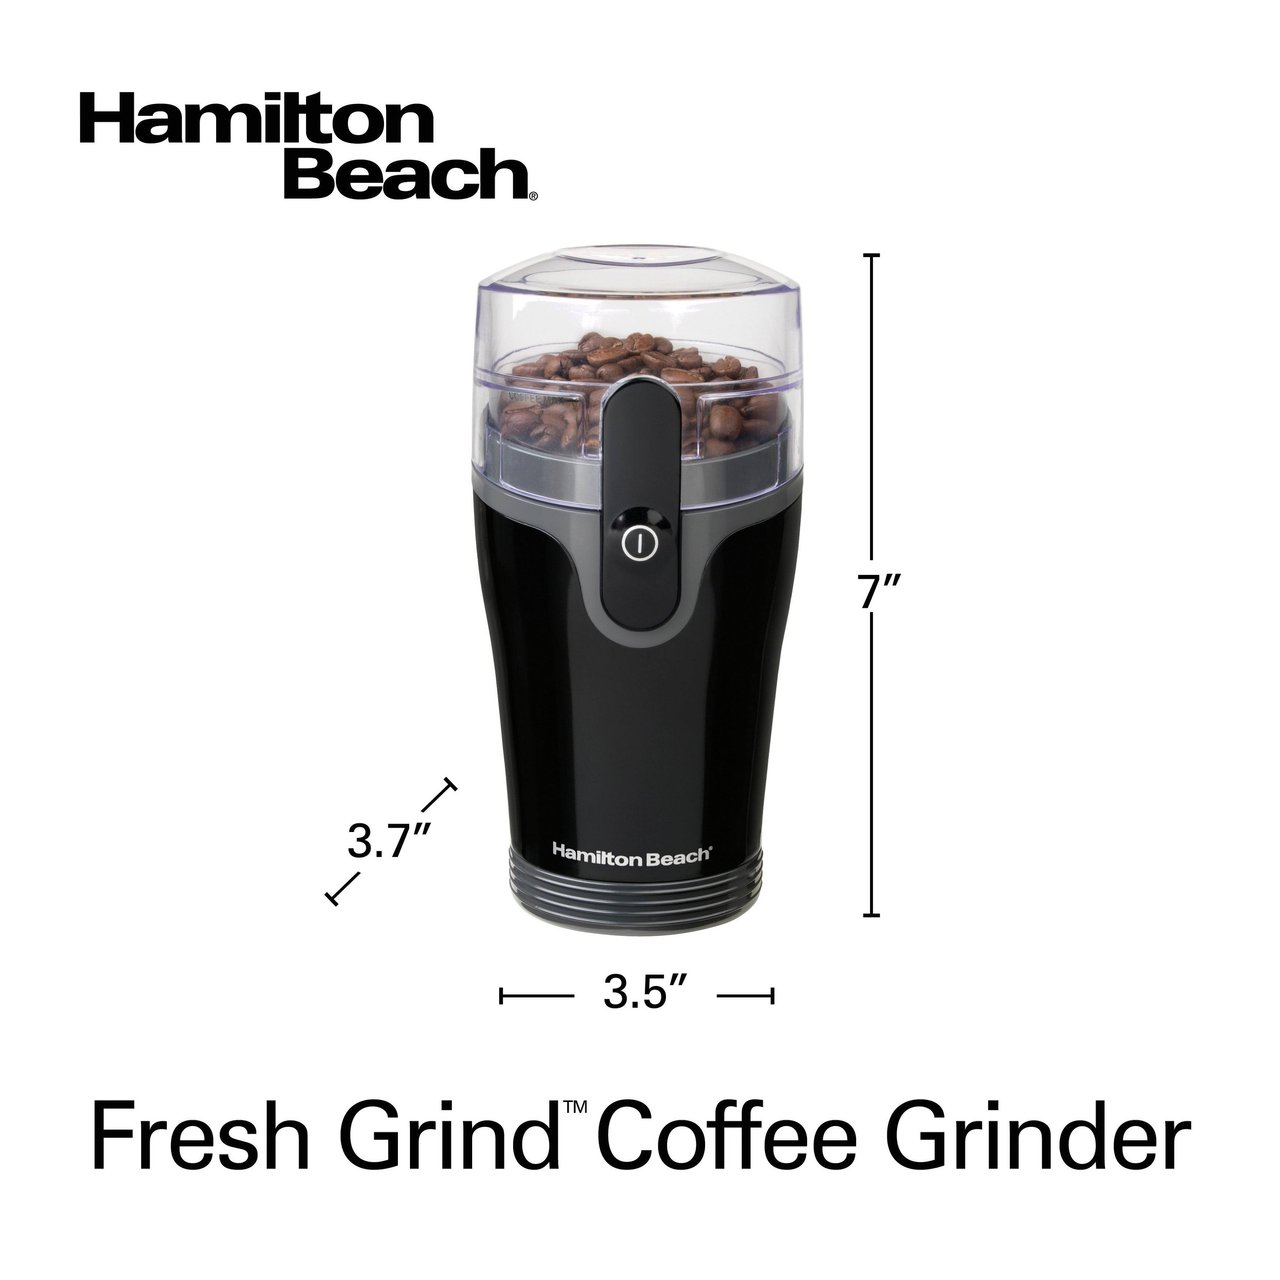 1 Hamilton Beach Electric Coffee Grinder